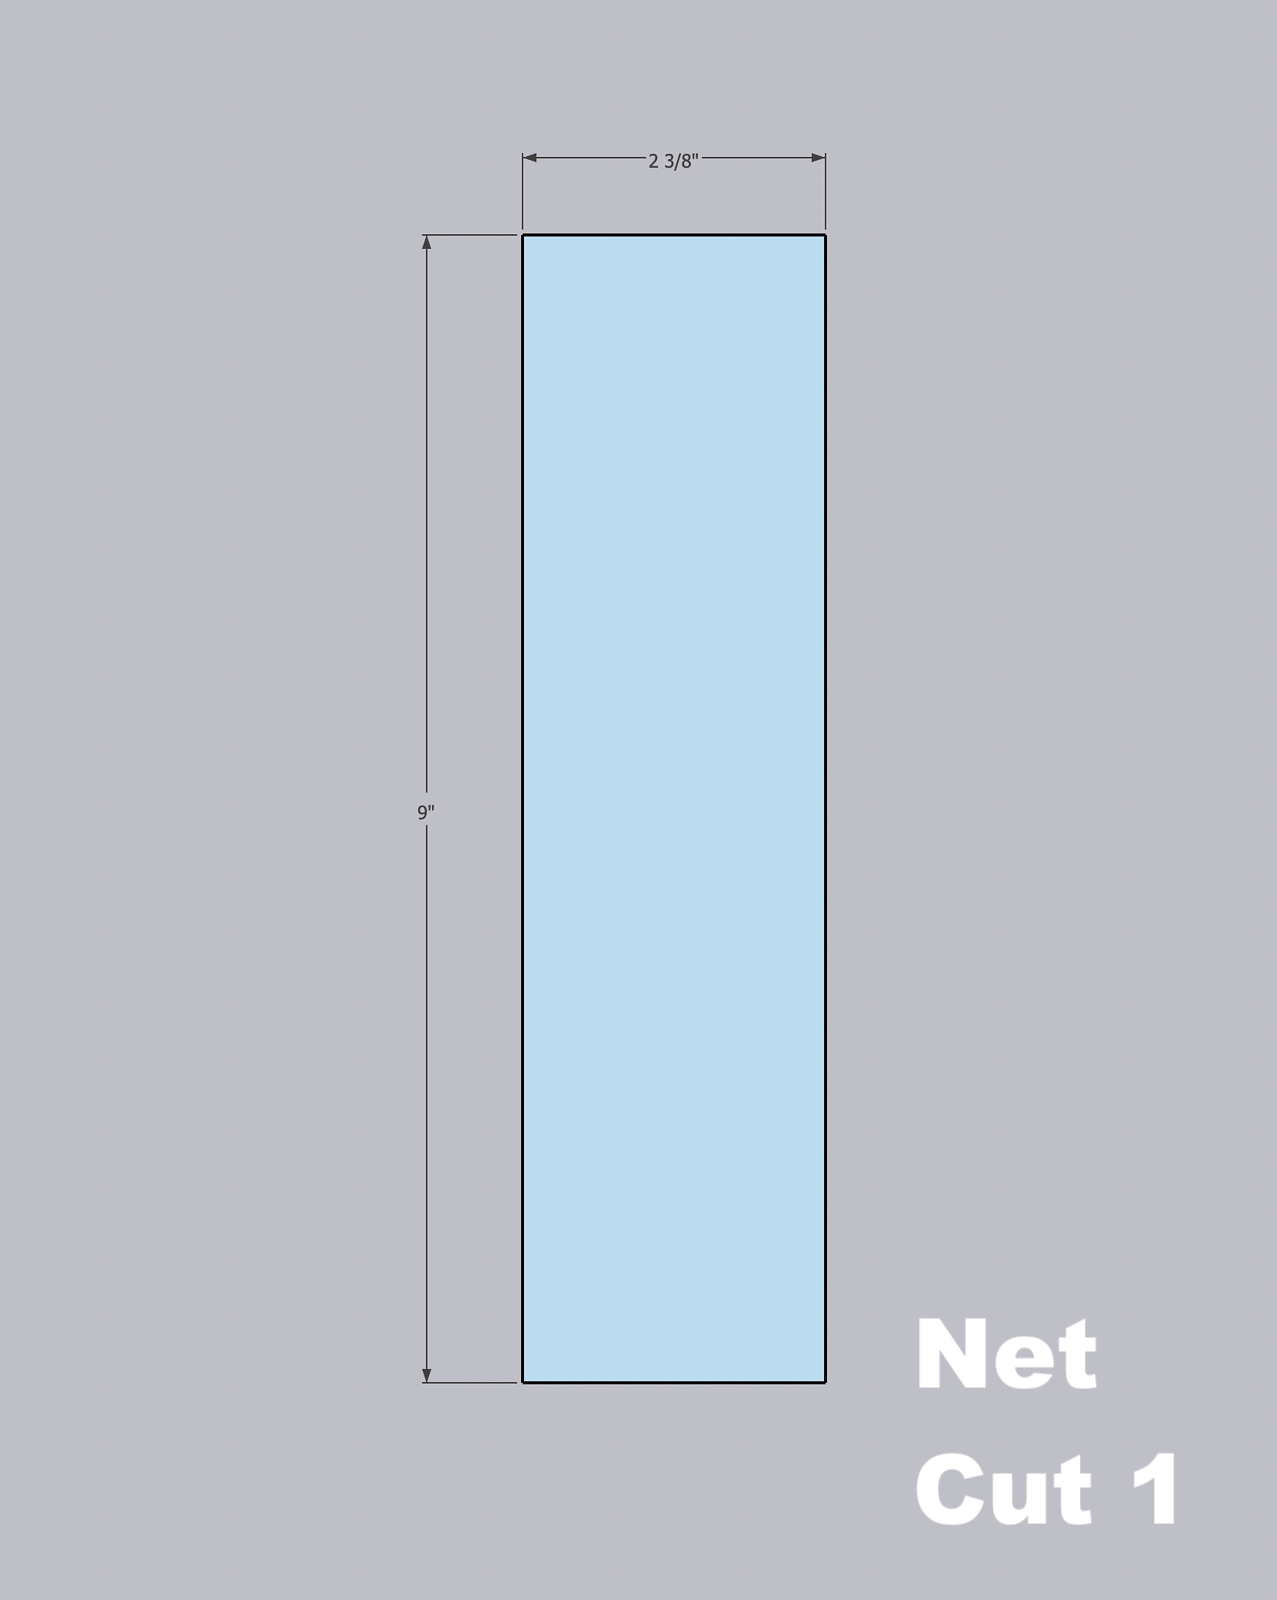 A measurement outline of a singular rectangle design 